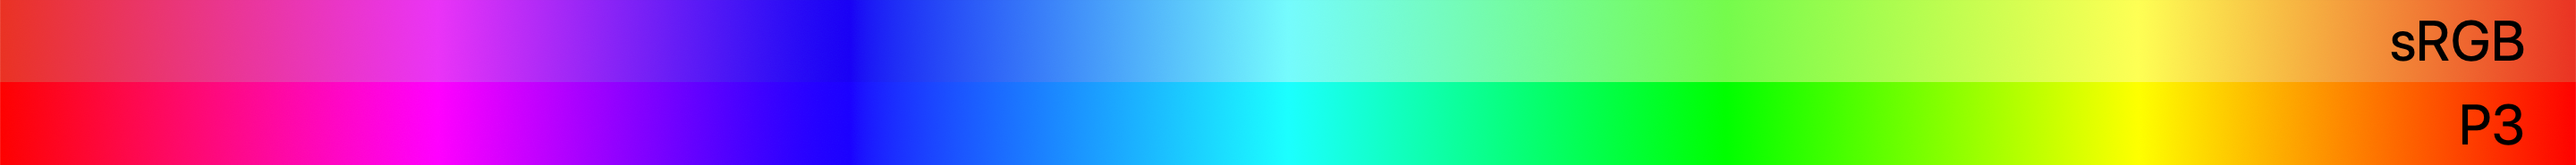 wide gamut P3 color vs sRGB